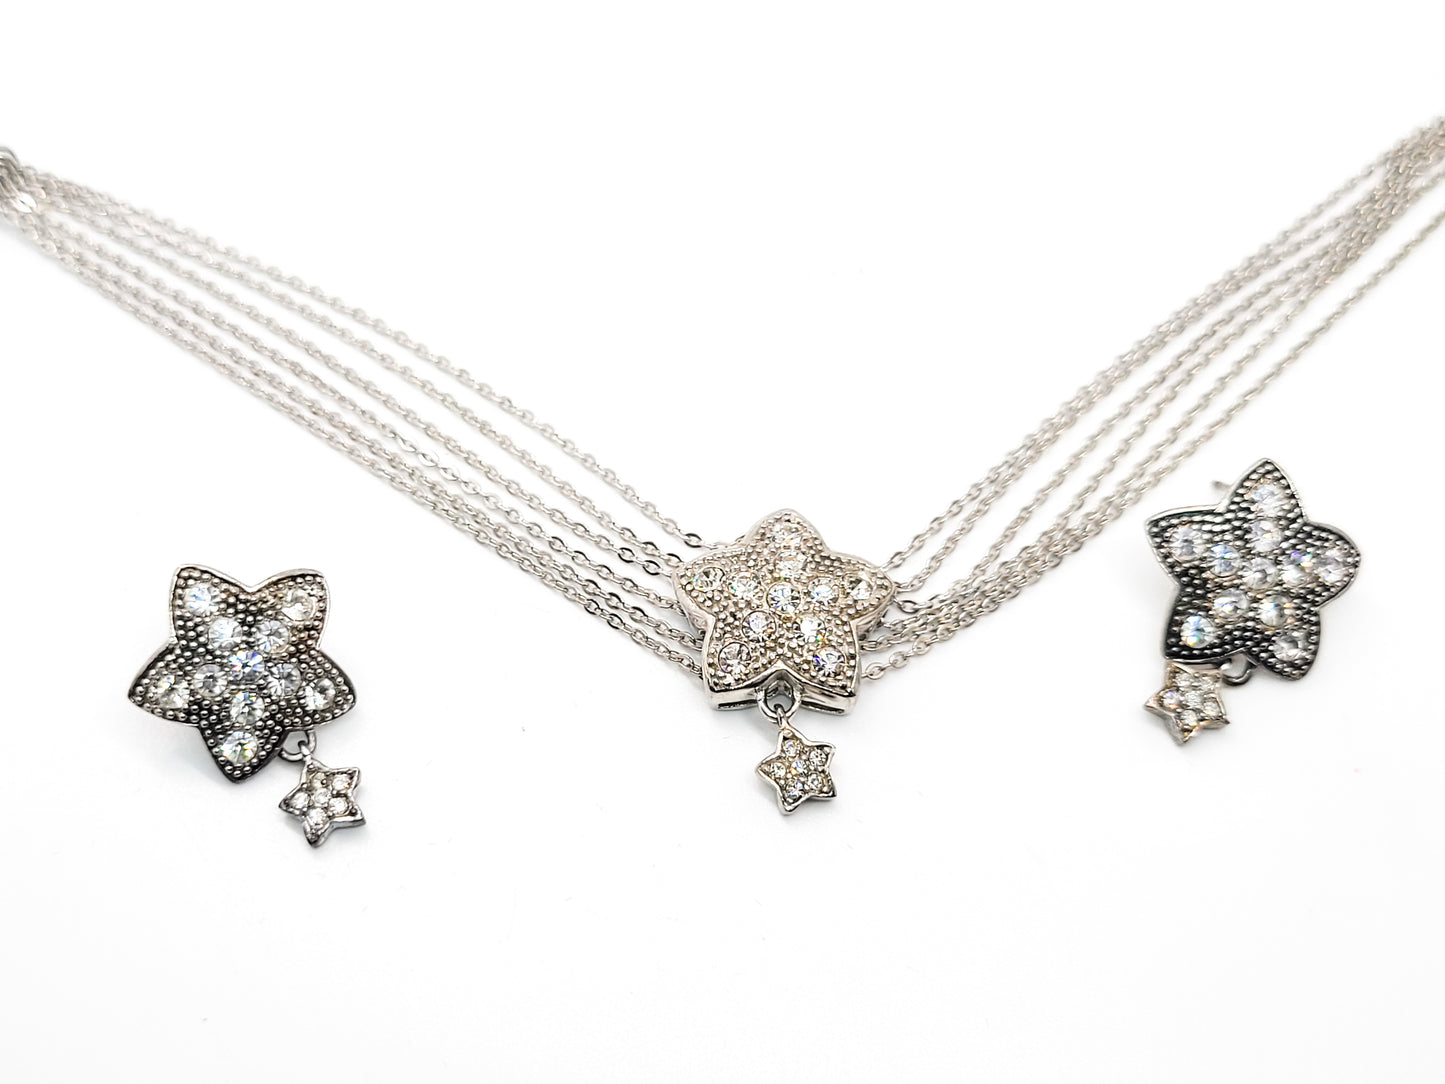 Dancing Star Pave rhinestone sterling silver multi strand bracelet and earrings demi set